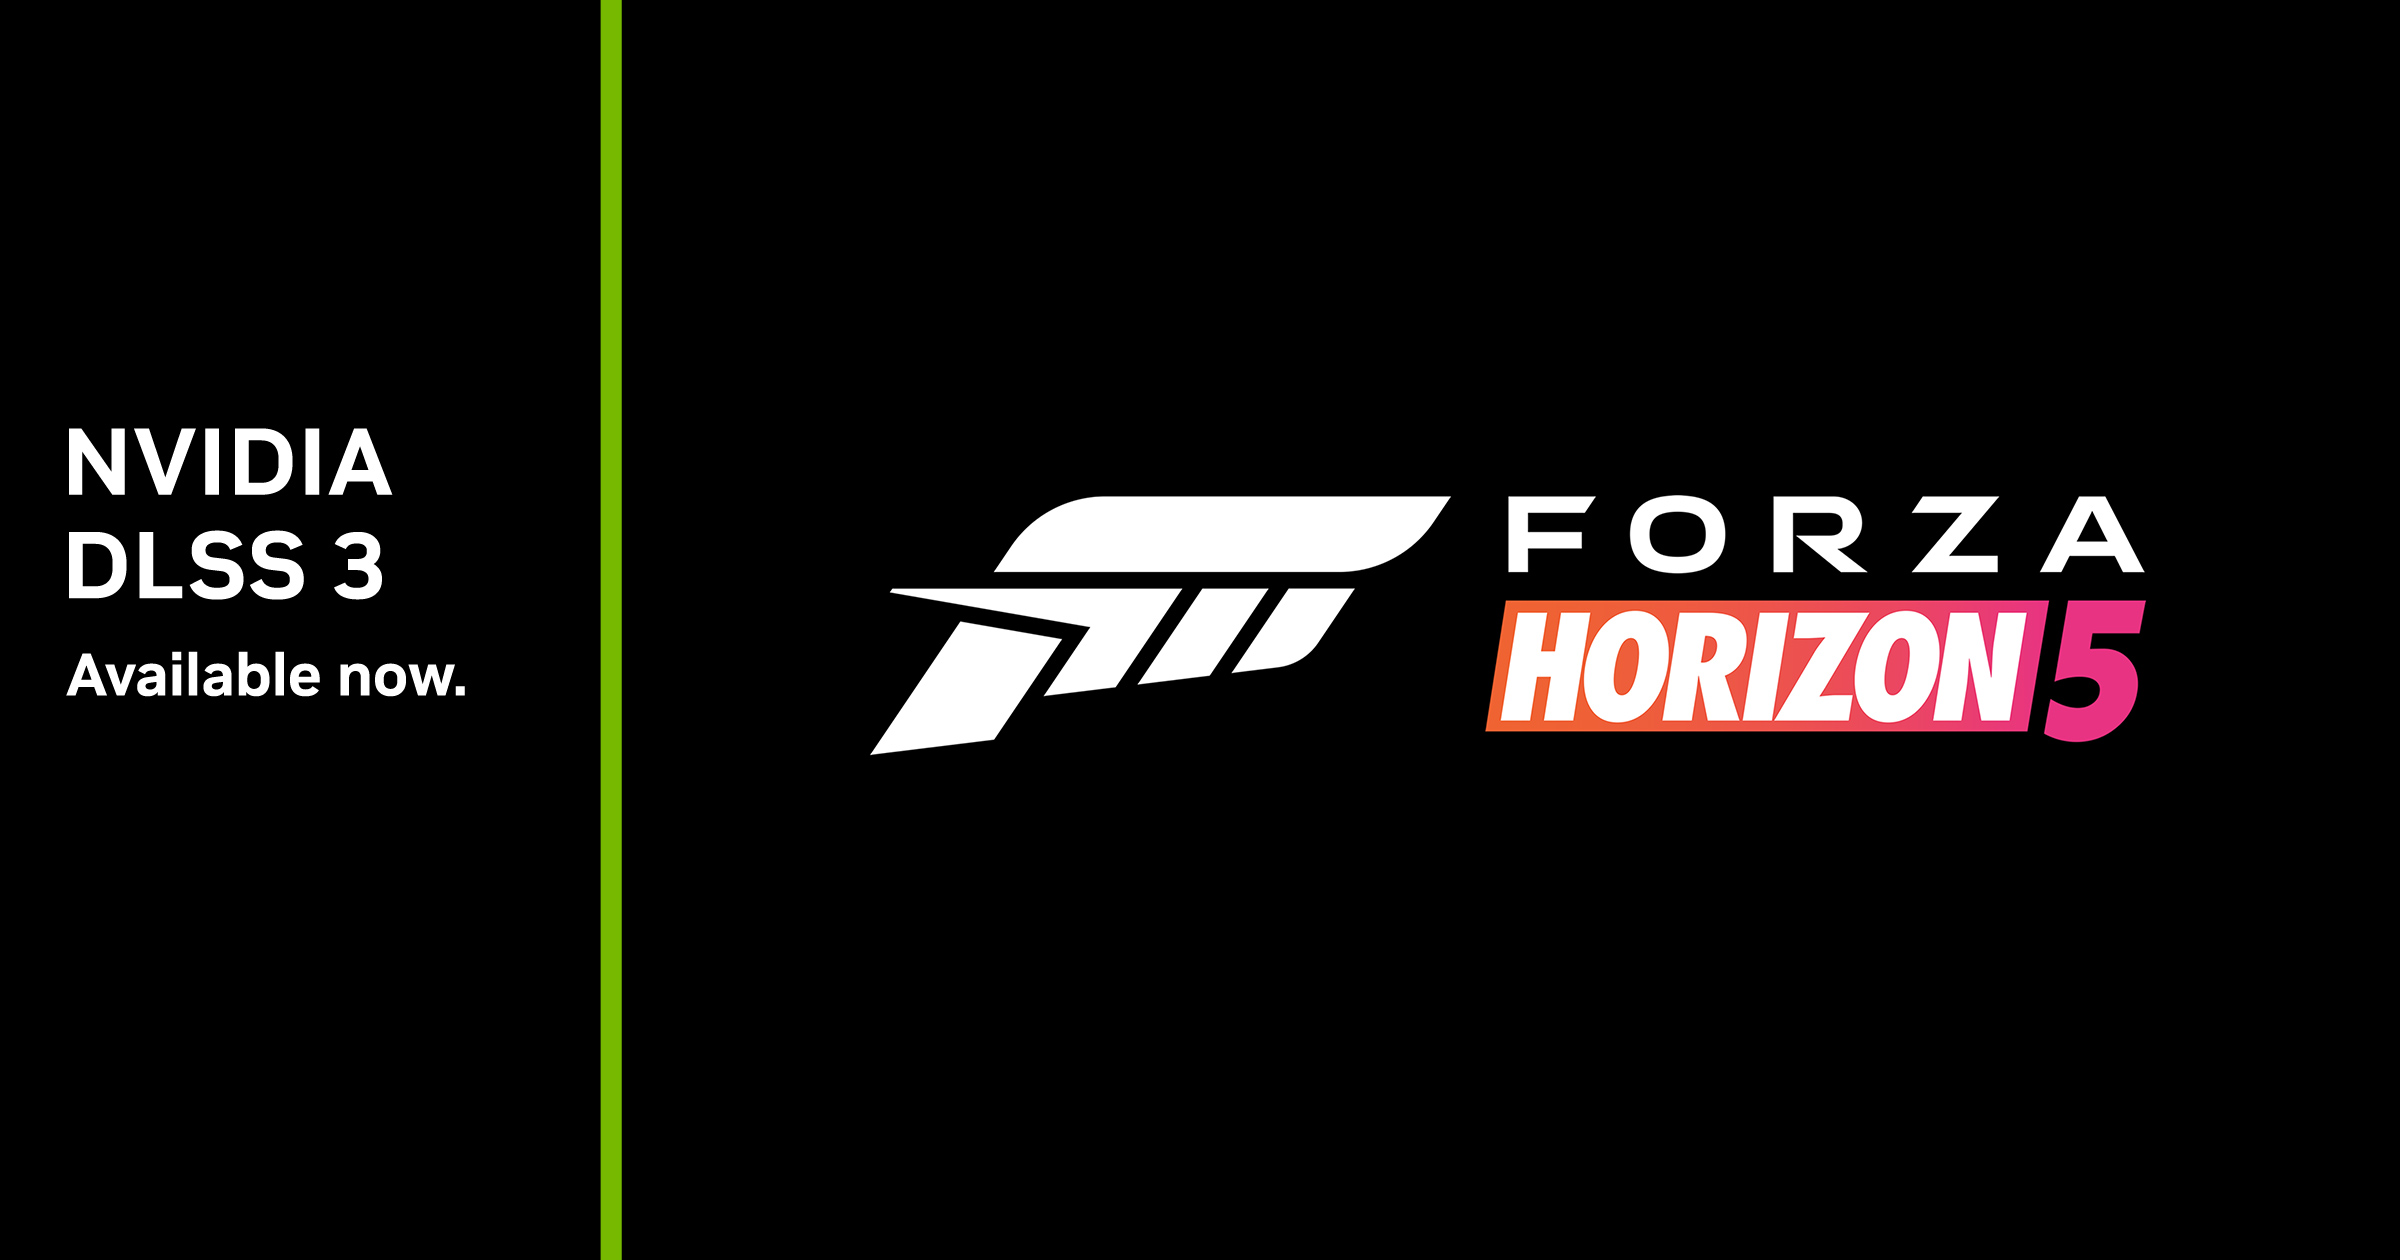 Forza Horizon 3 Serial Key Generator — Crack Download PC